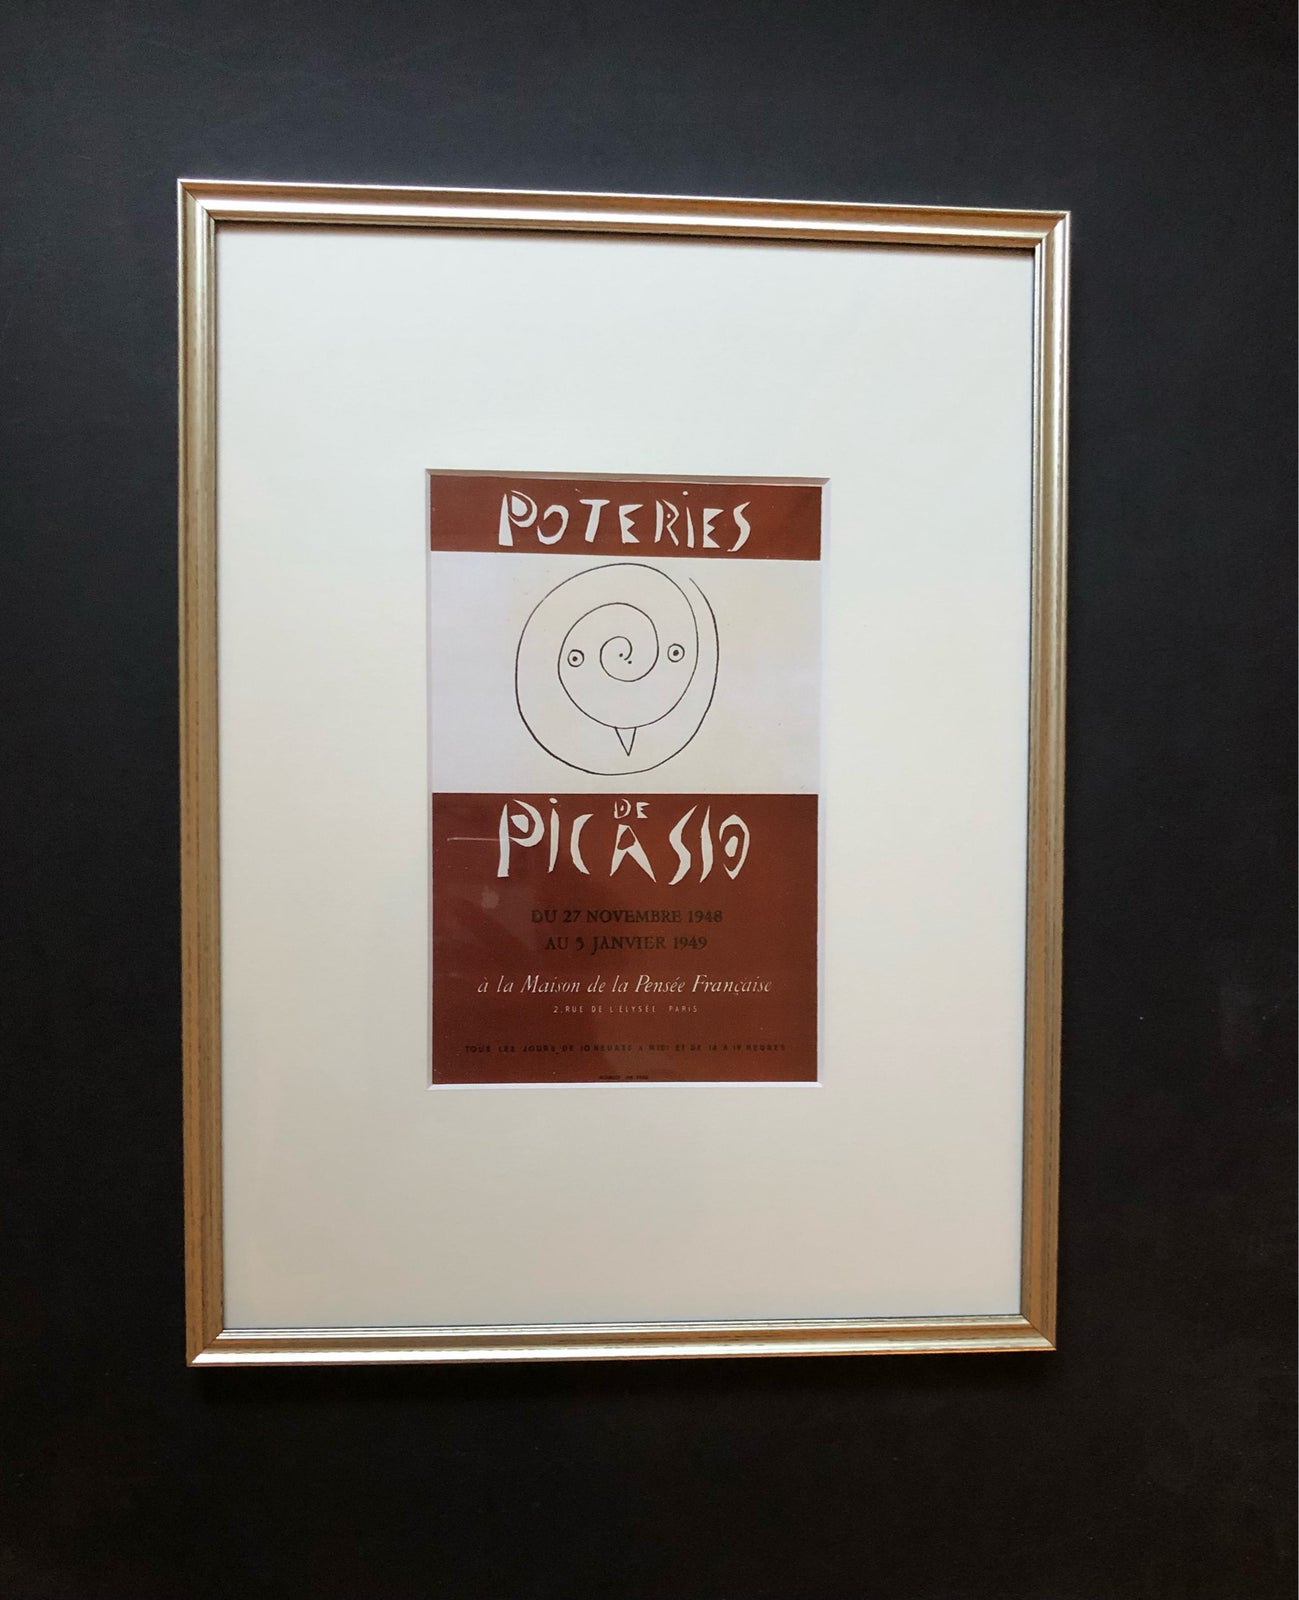 Indrammet Picasso-billede, Picasso, b: 32 h: 42